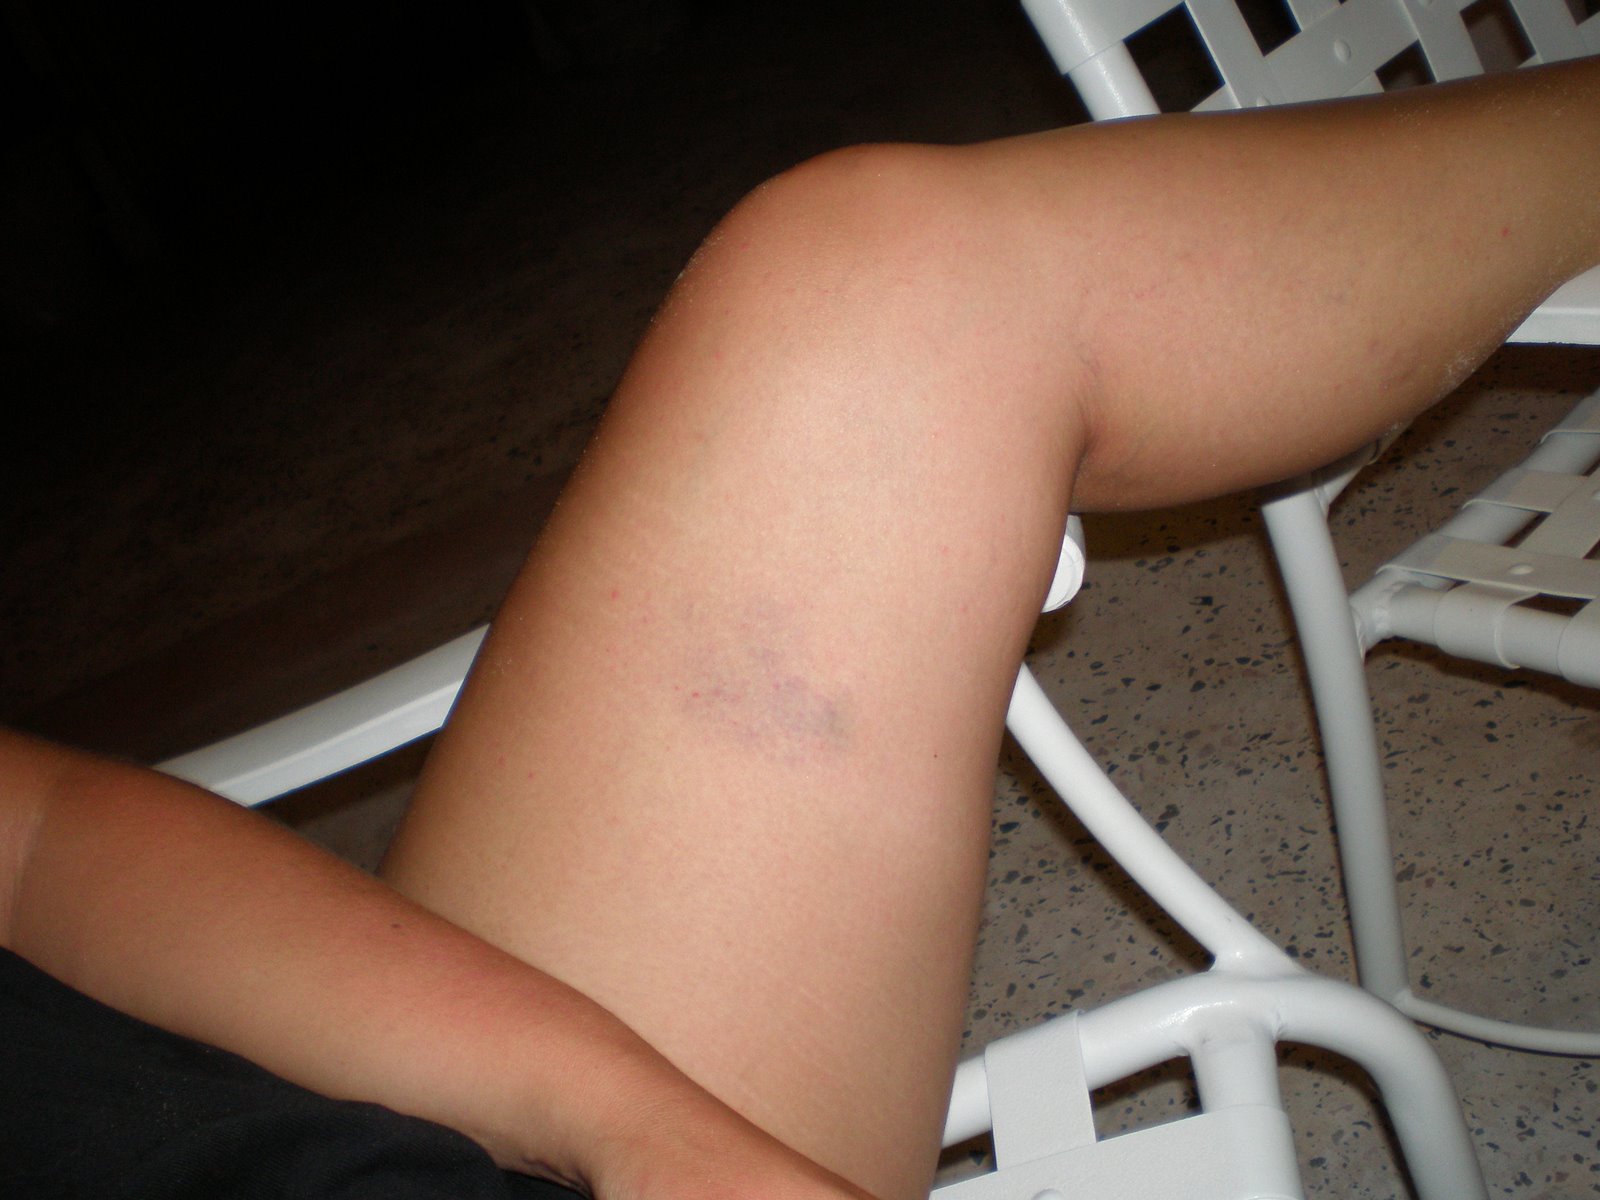 [ang+inner+thigh+bruise.JPG]